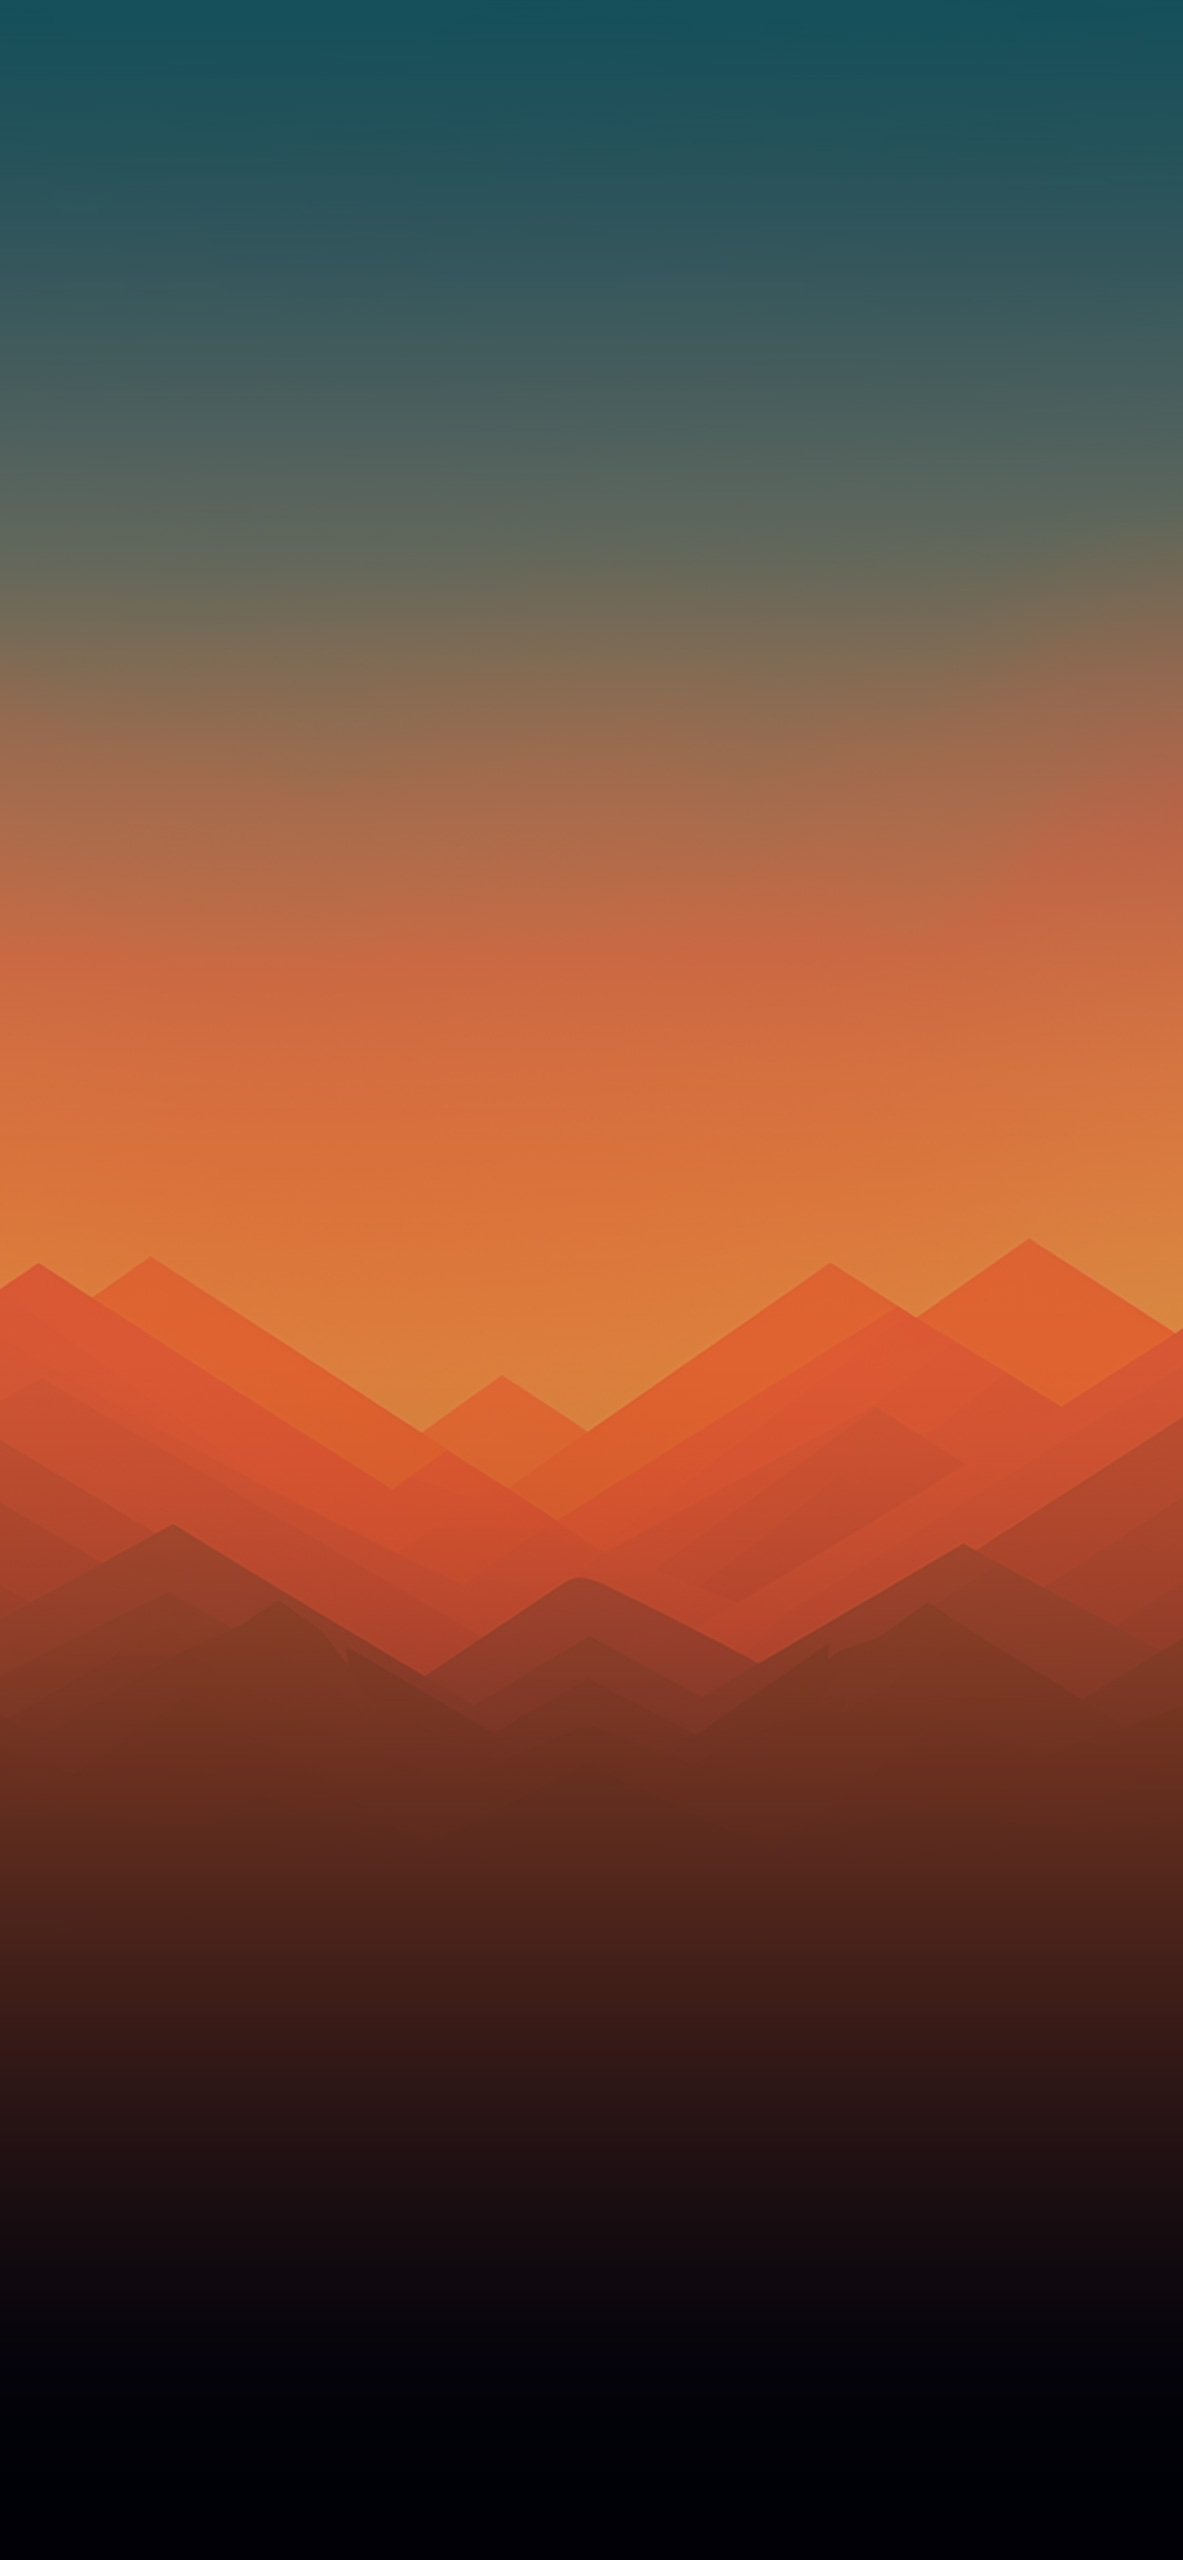 orange mountains minimalist background